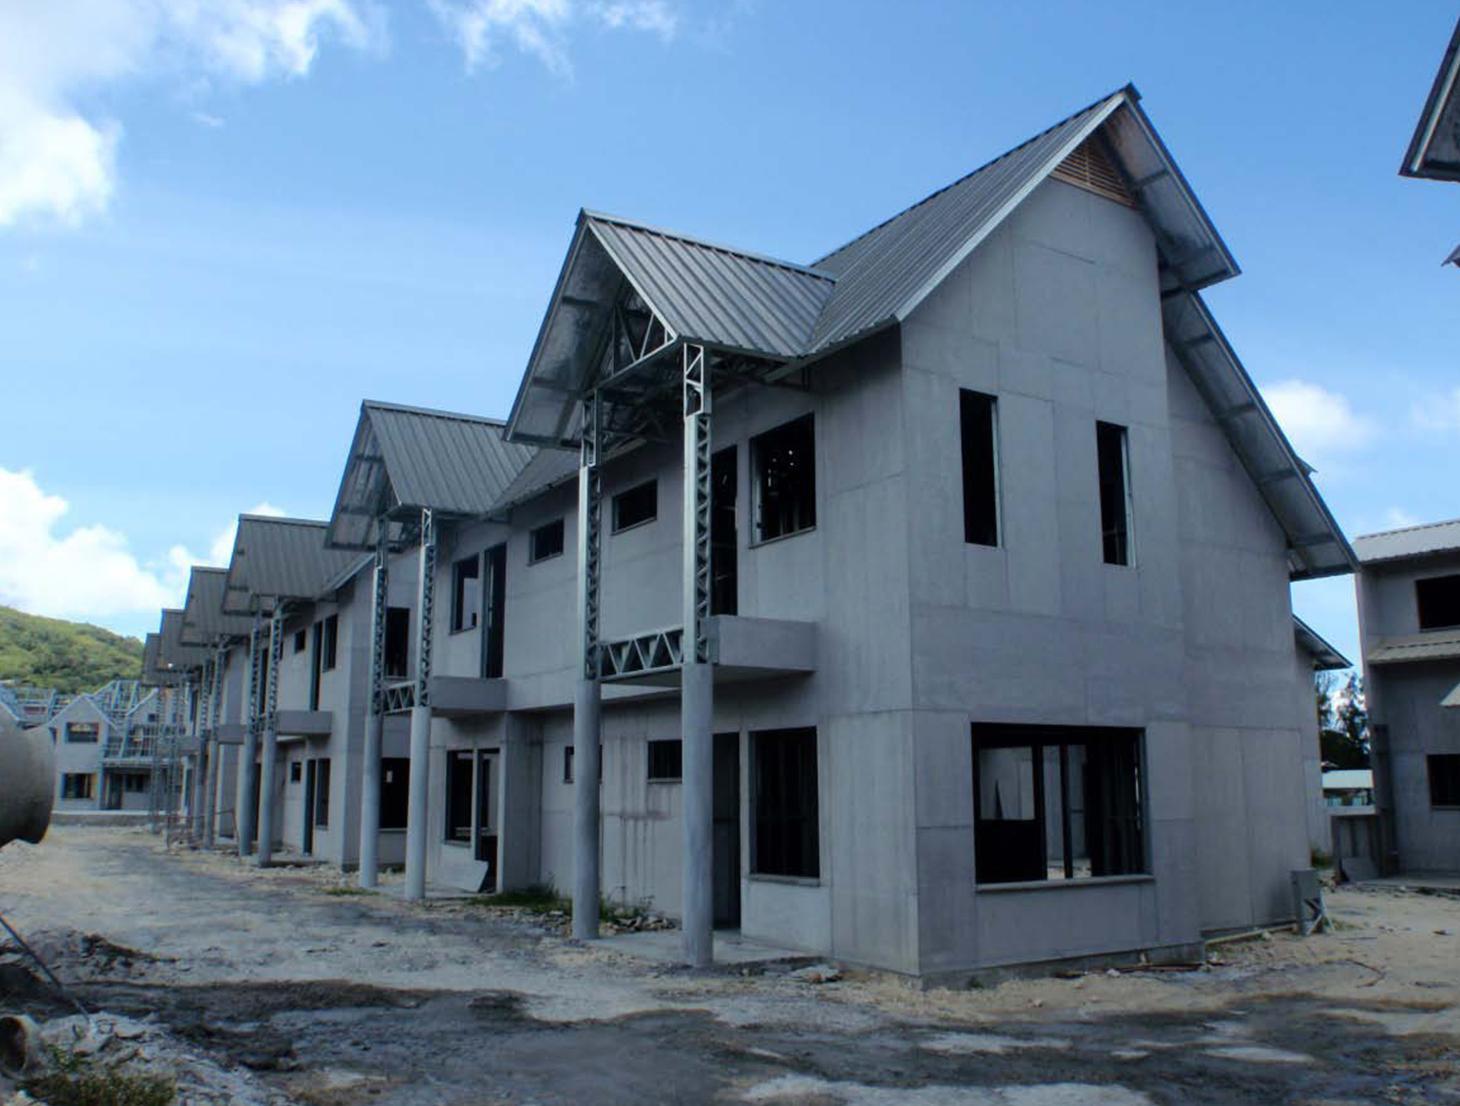 Seychelles housing